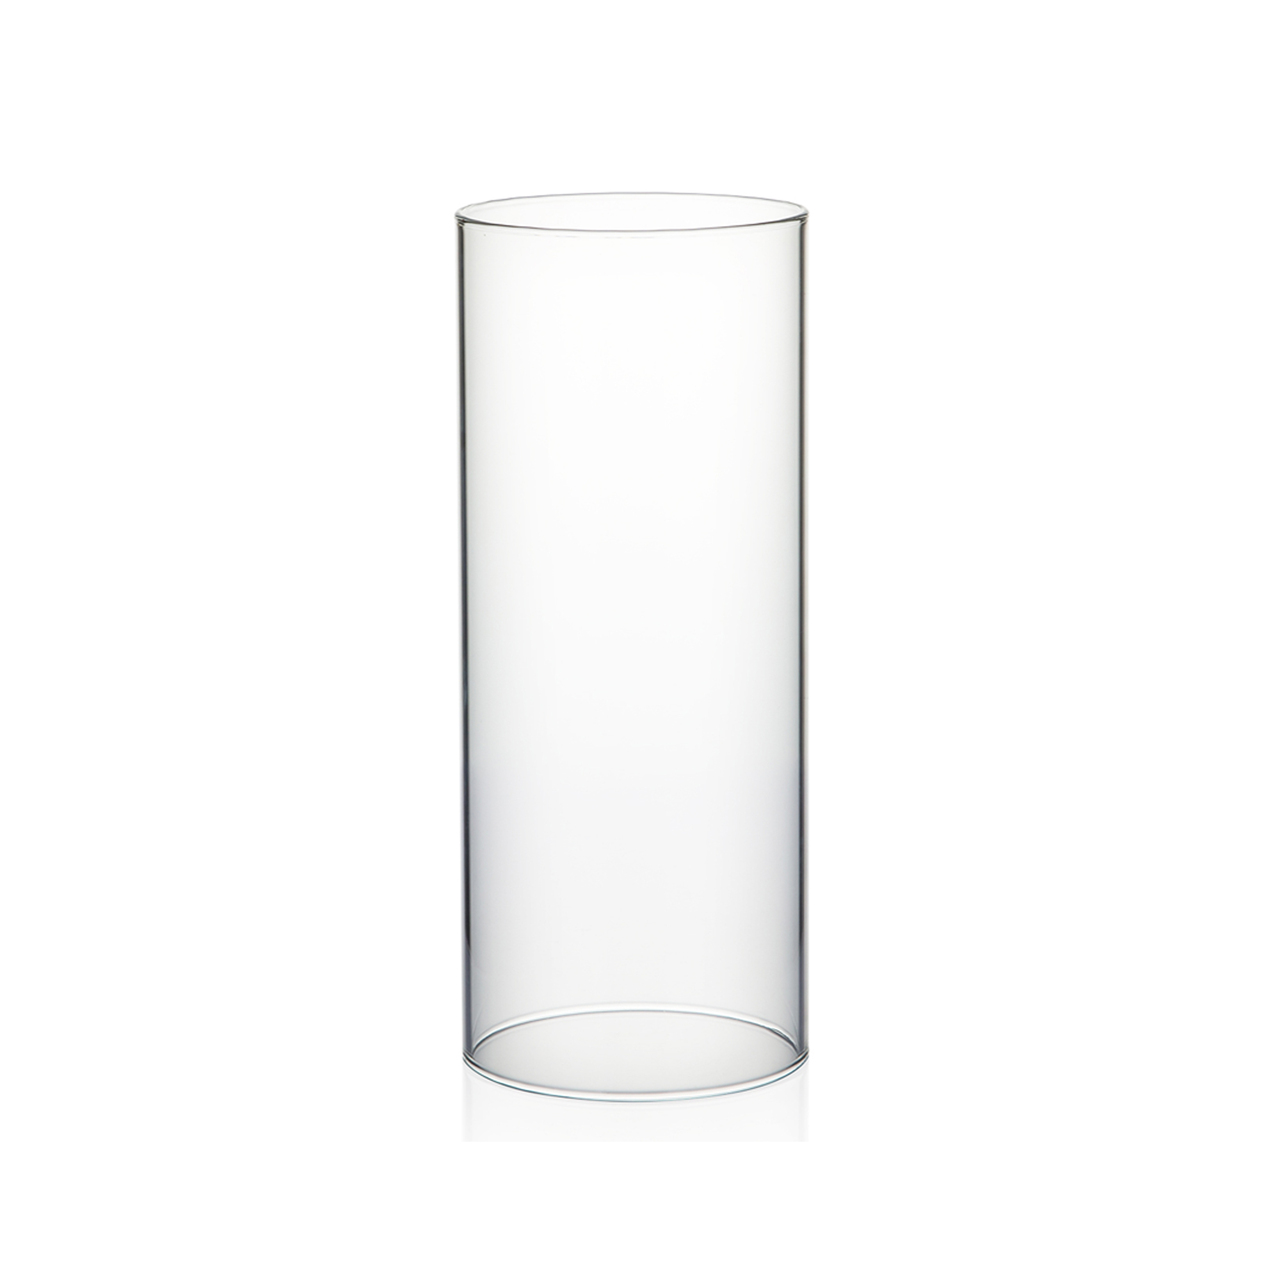 Hurricane cylinder vase